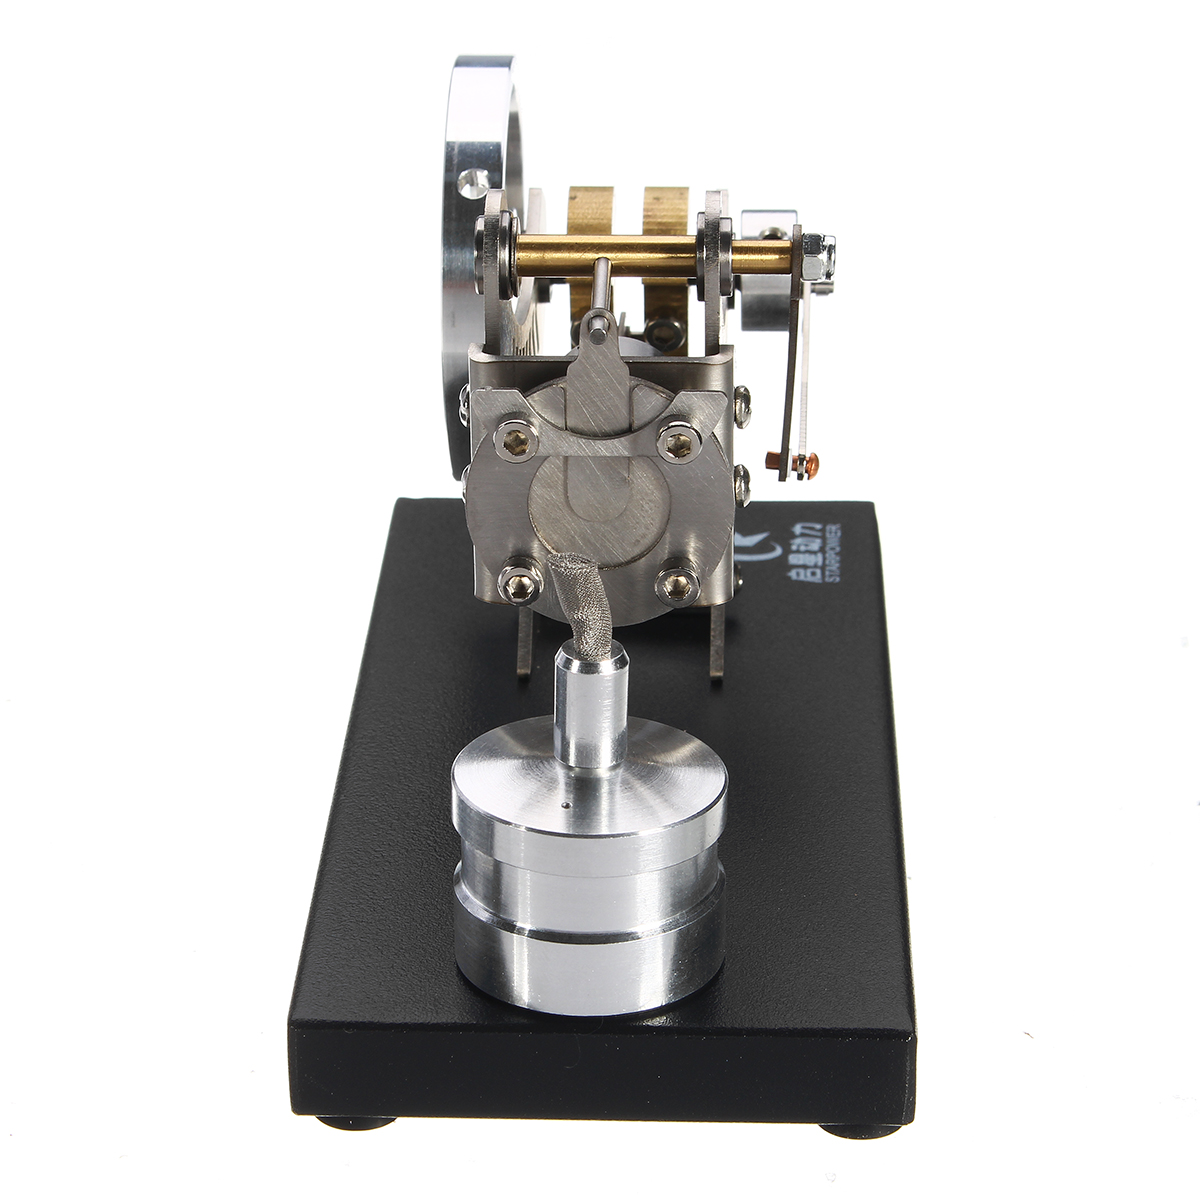 STARPOWER-Live-Vacuum-Engine-Hot-Air-Stirling-Engine-Model-Science-Study-Developmental-Toy-1240602-5